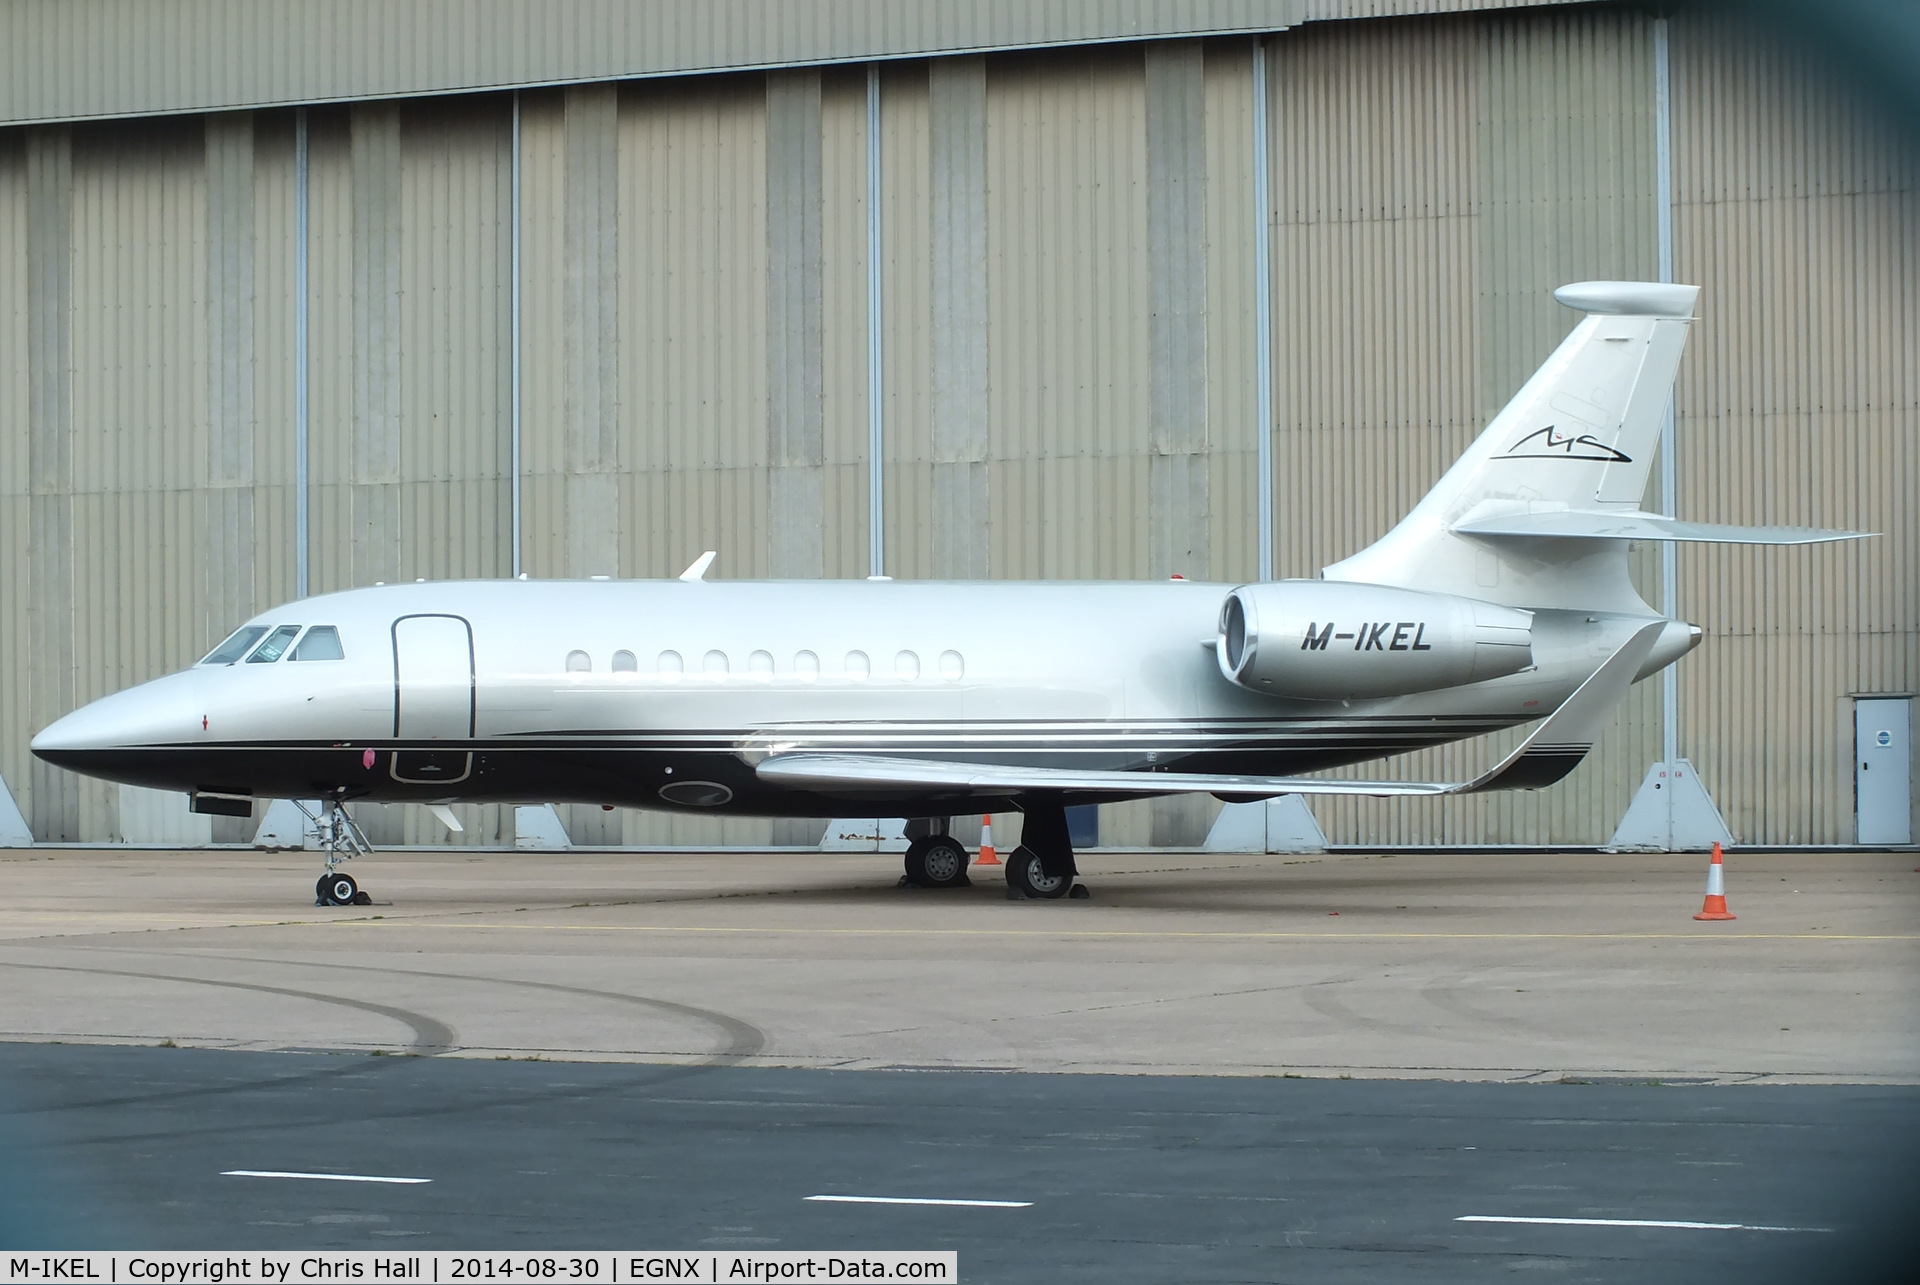 M-IKEL, 2010 Dassault Falcon 2000LX C/N 216, Michael Schumacher's private jet